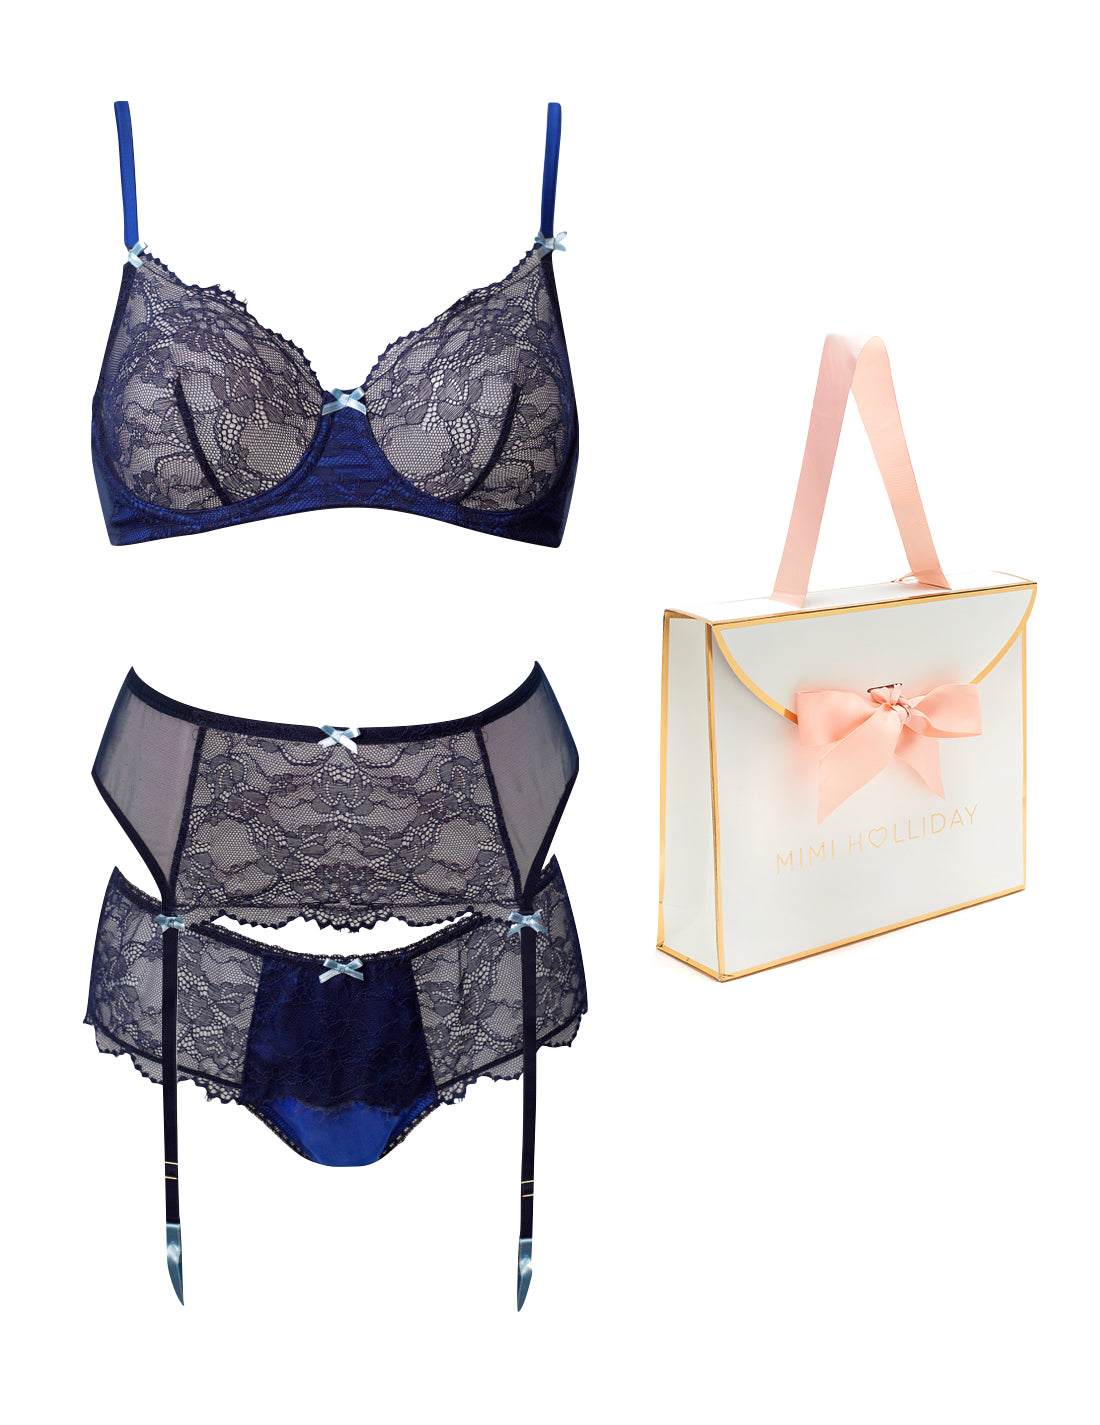 Tanzanita Comfort Bra, Brief, Suspender & Bag Gift Set